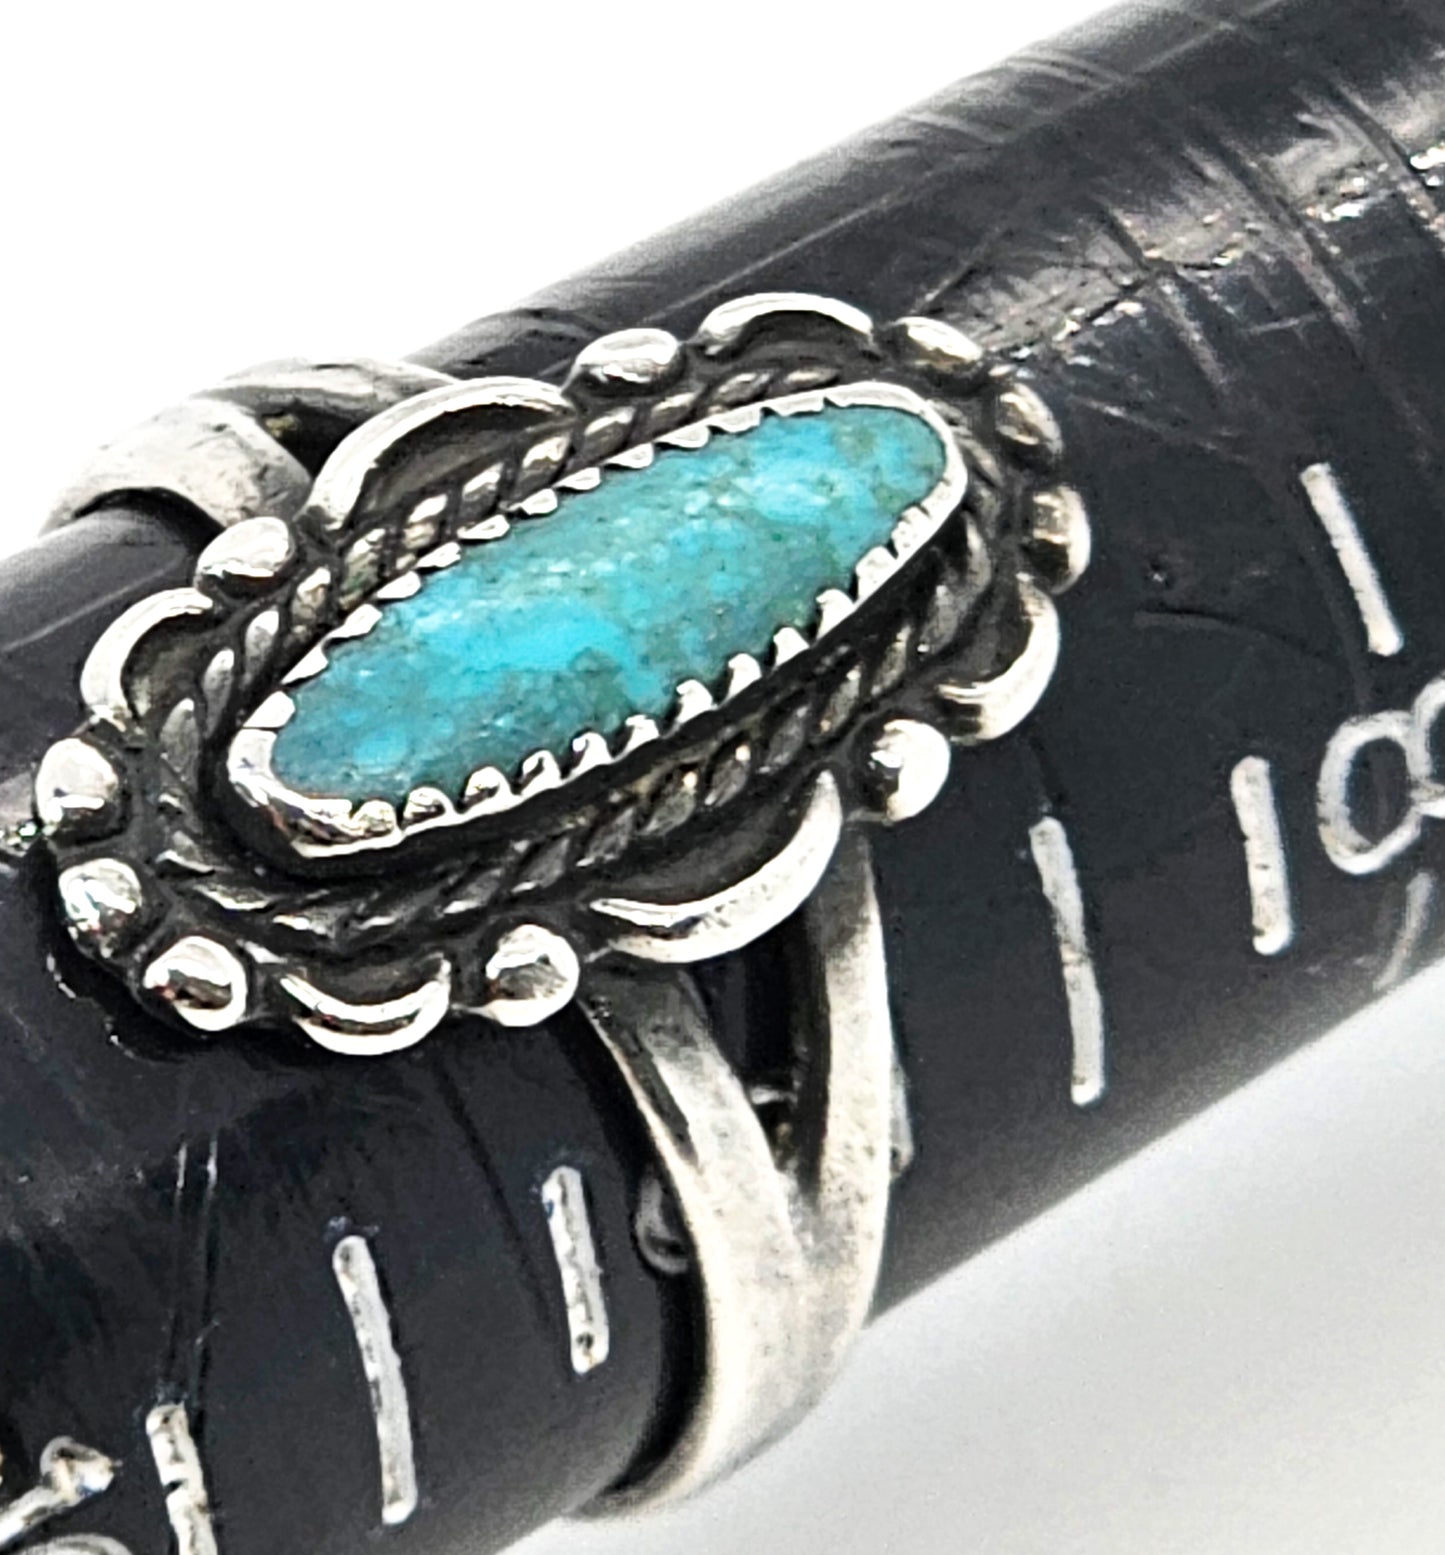 Wheeler Manufacturing Turquoise split shank vintage sterling silver ring size 9